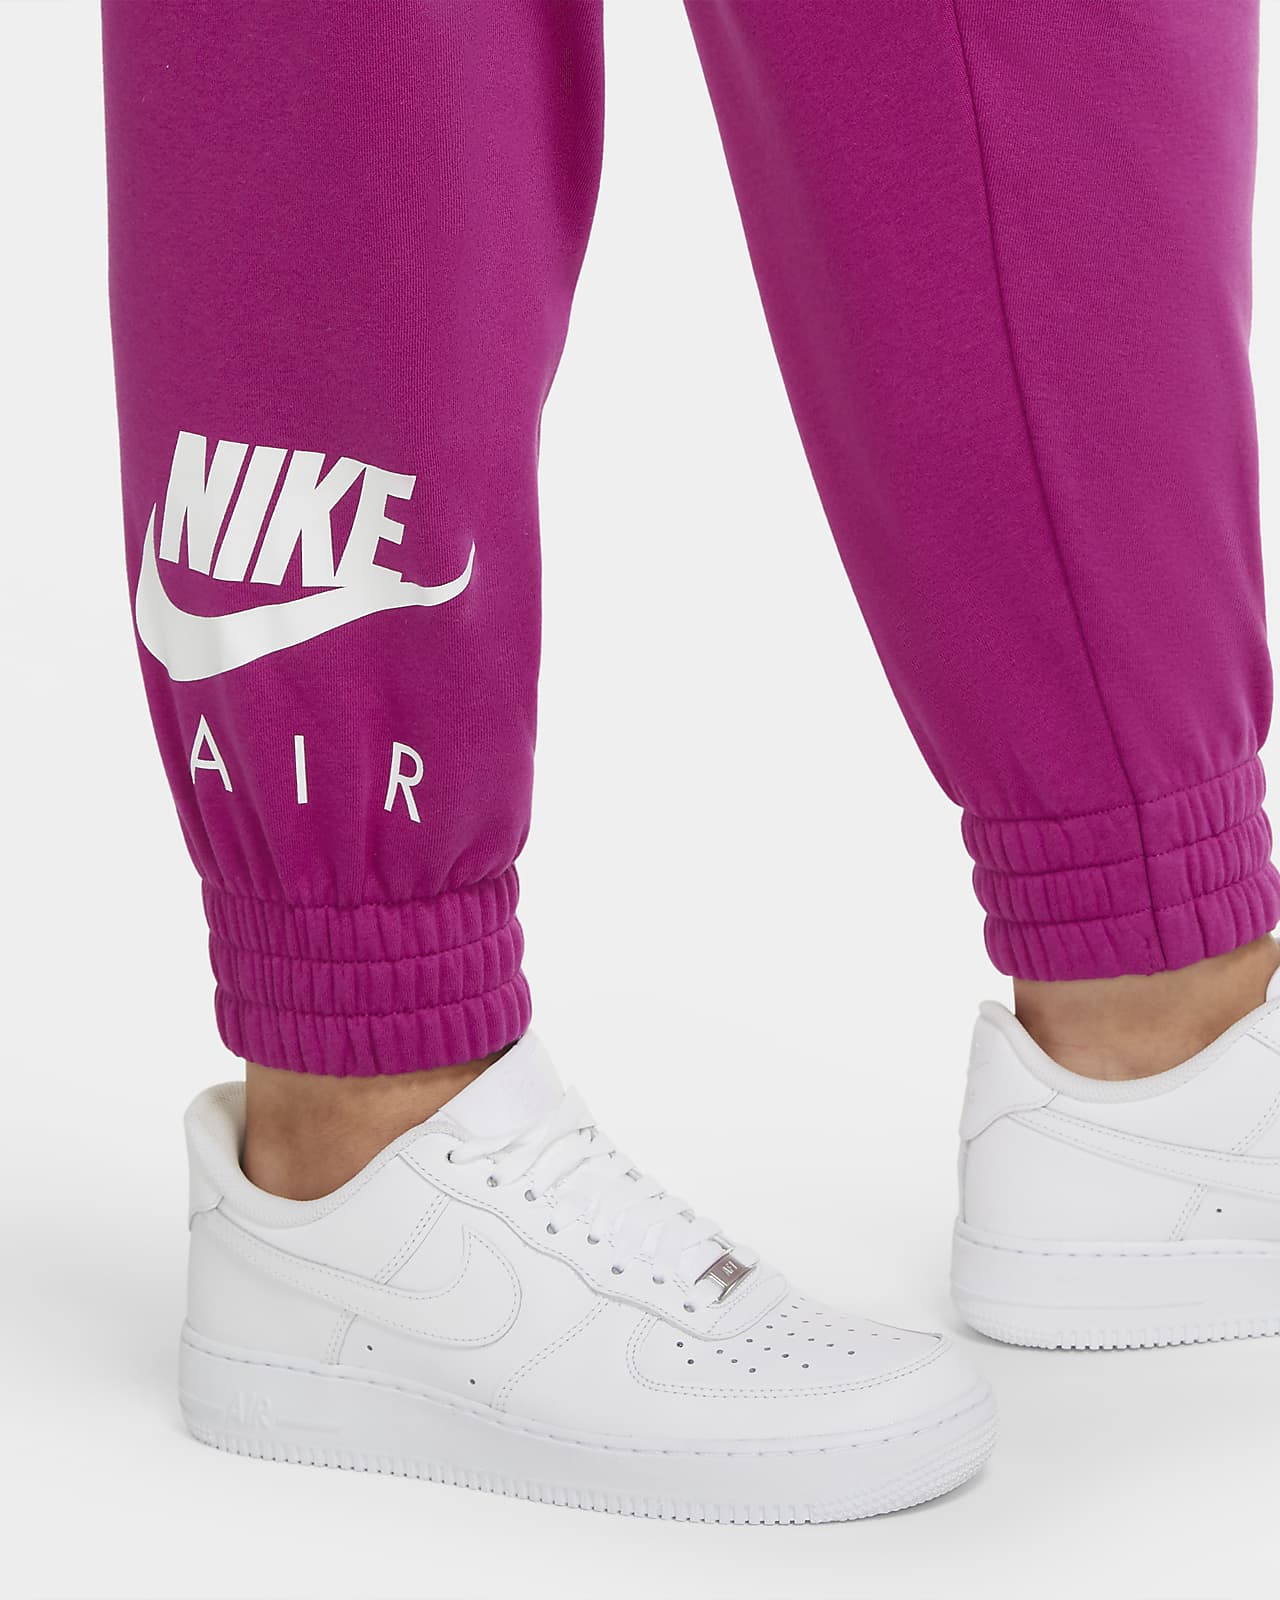 Pantalones de tejido fleece 7/8 para mujer Nike Air (talla grande). Nike CL